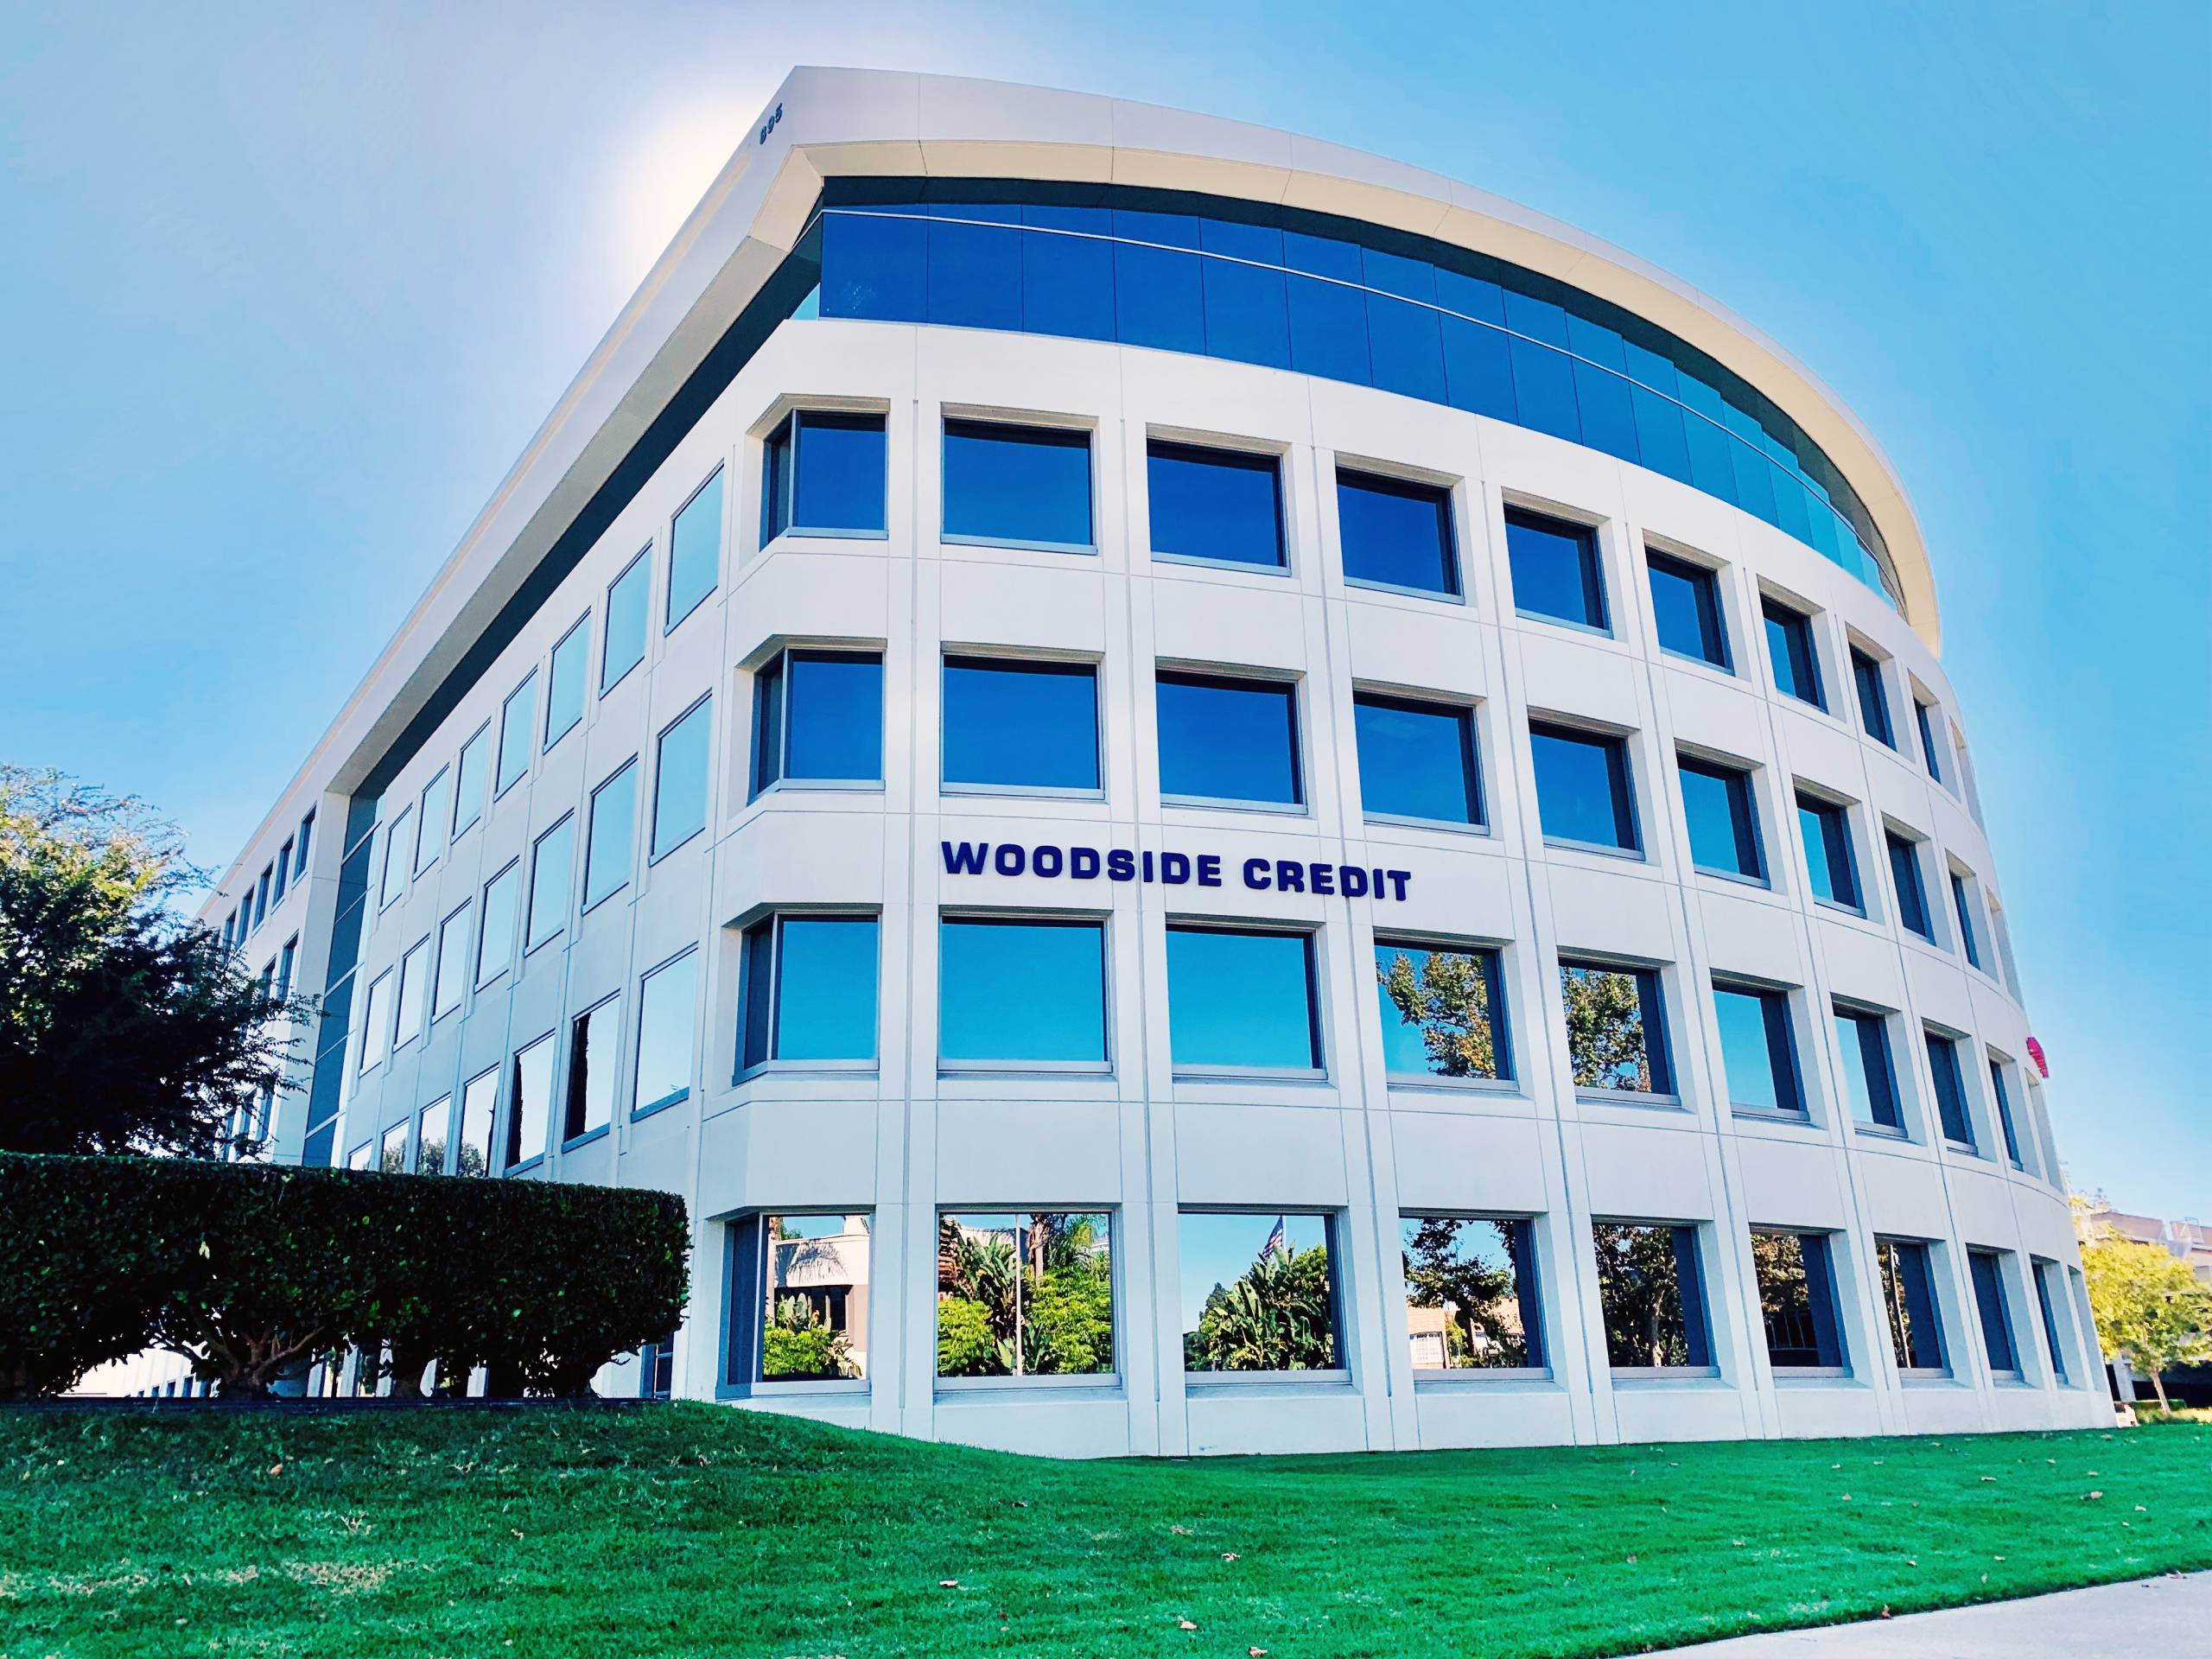 Woodside credit headquarters in newport beach california